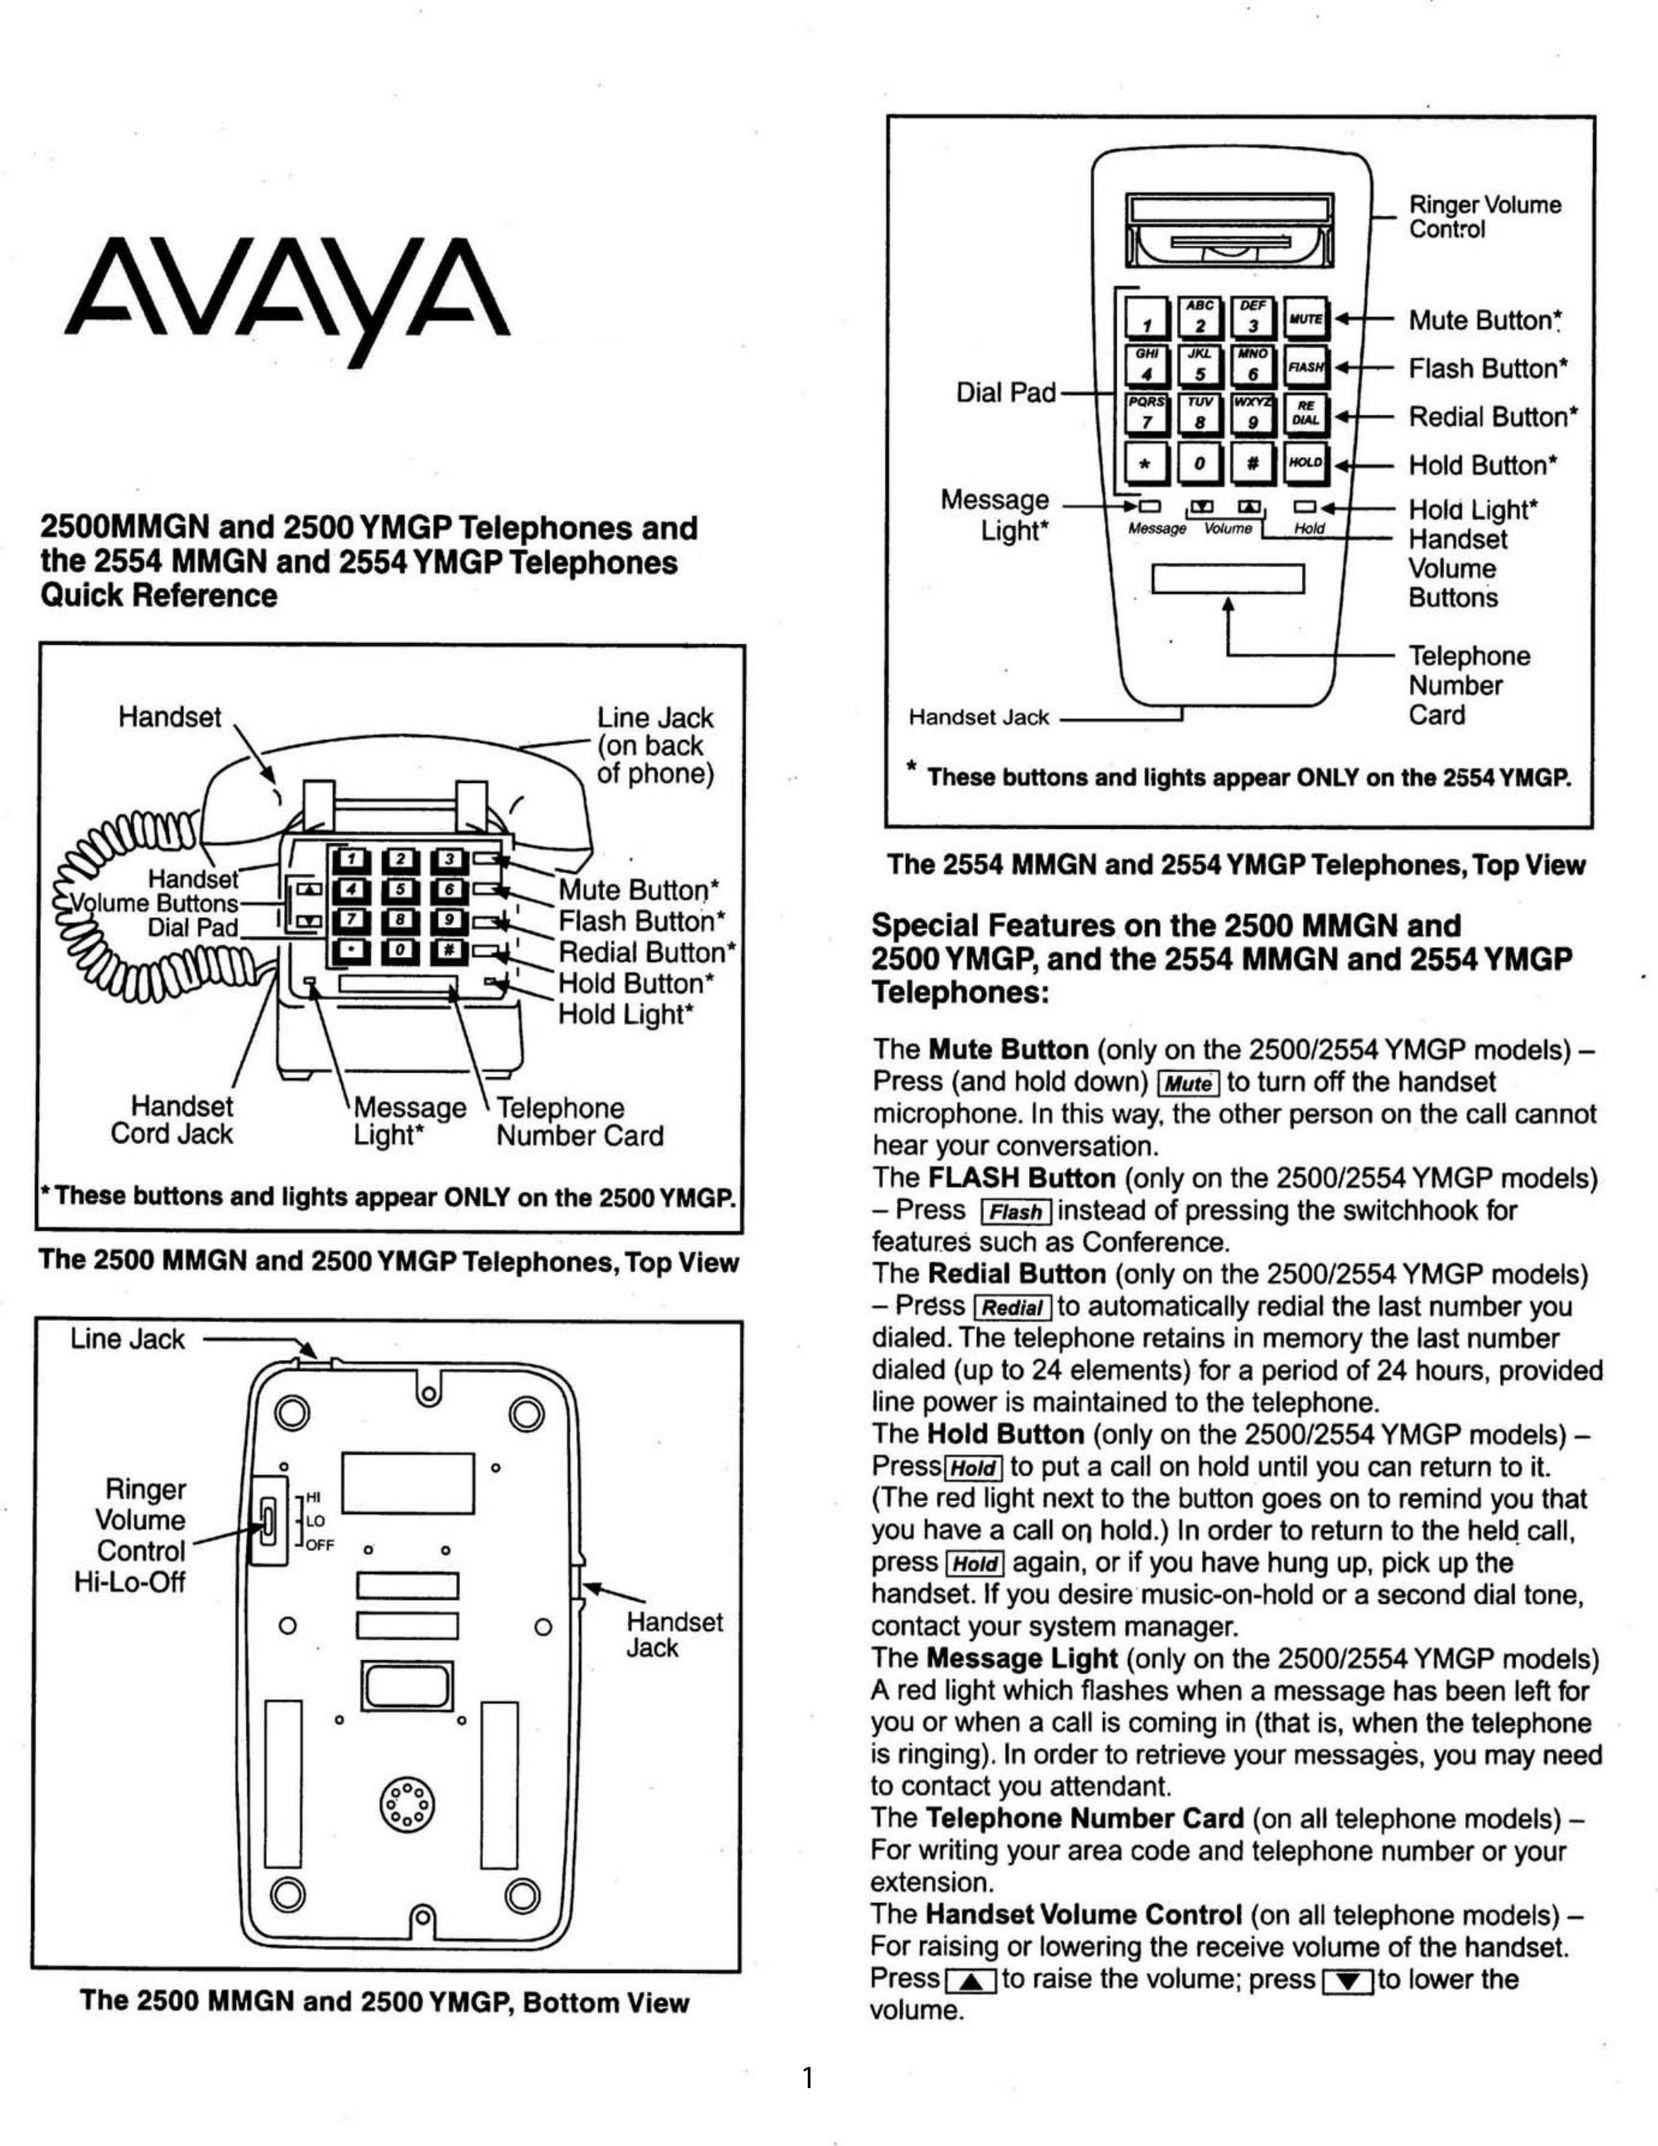 Avaya 2554 YMGP Telephone User Manual